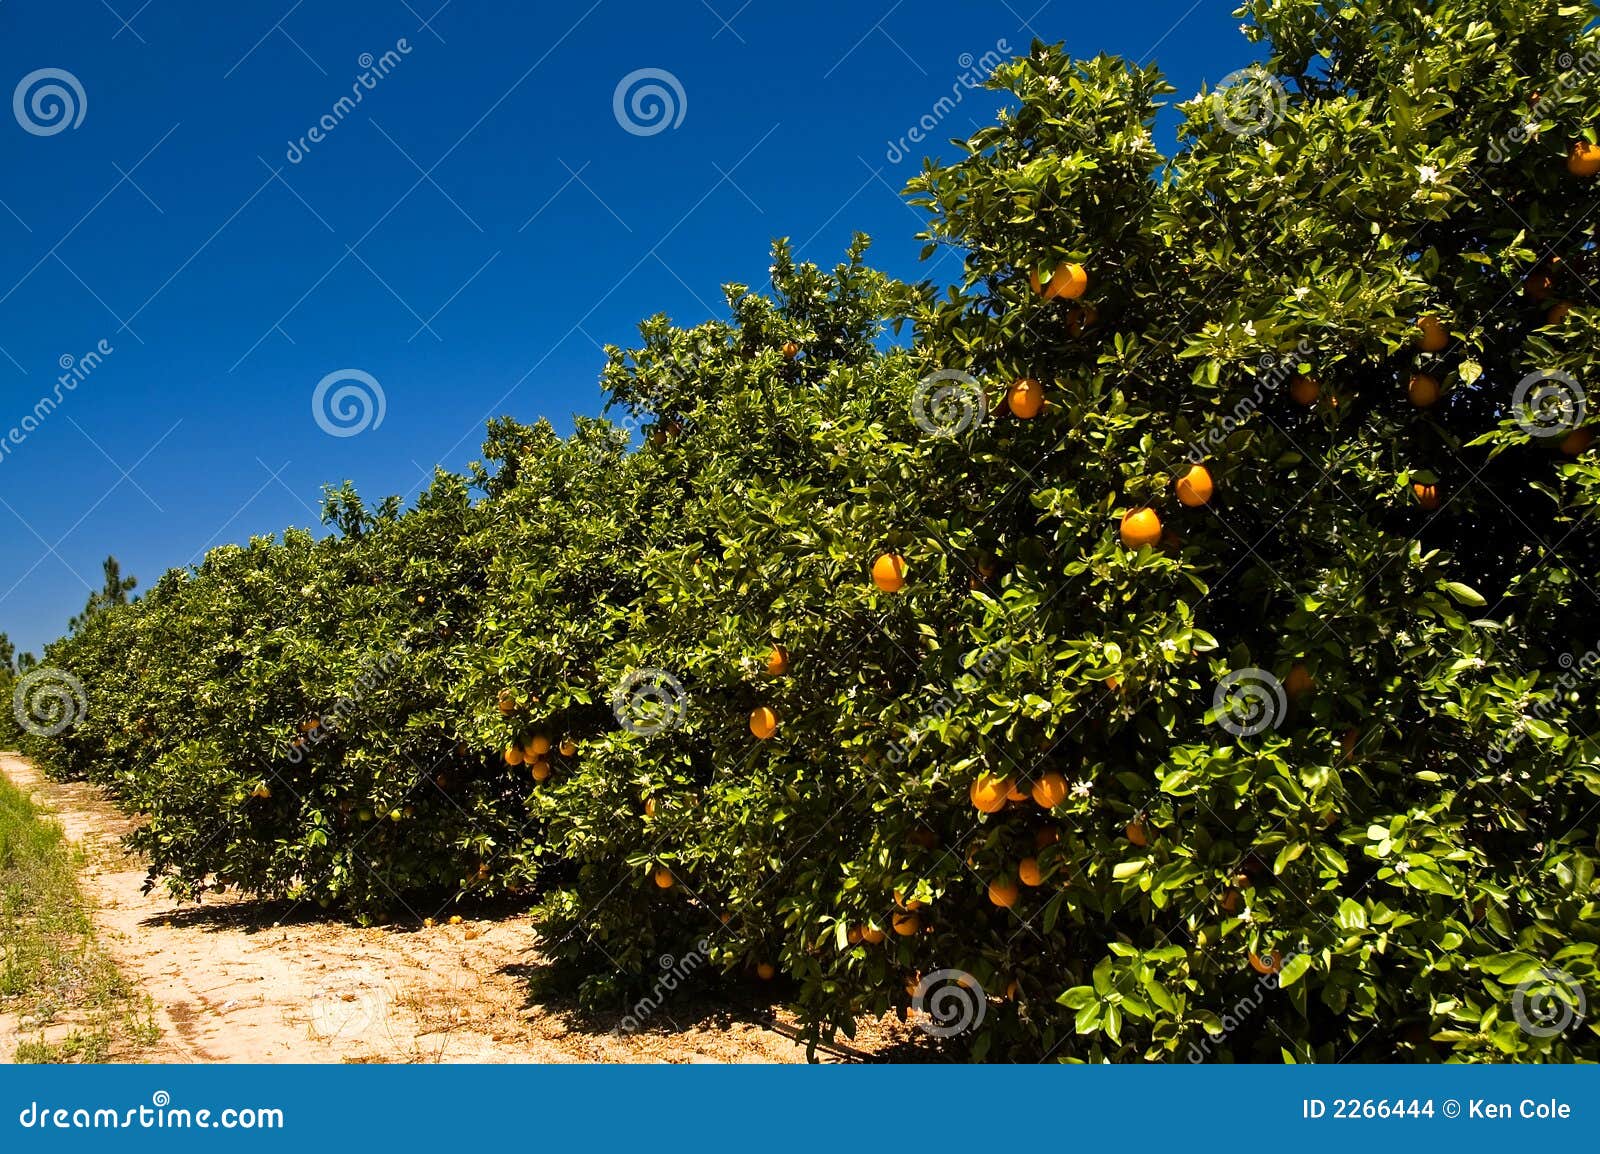 florida orange grove